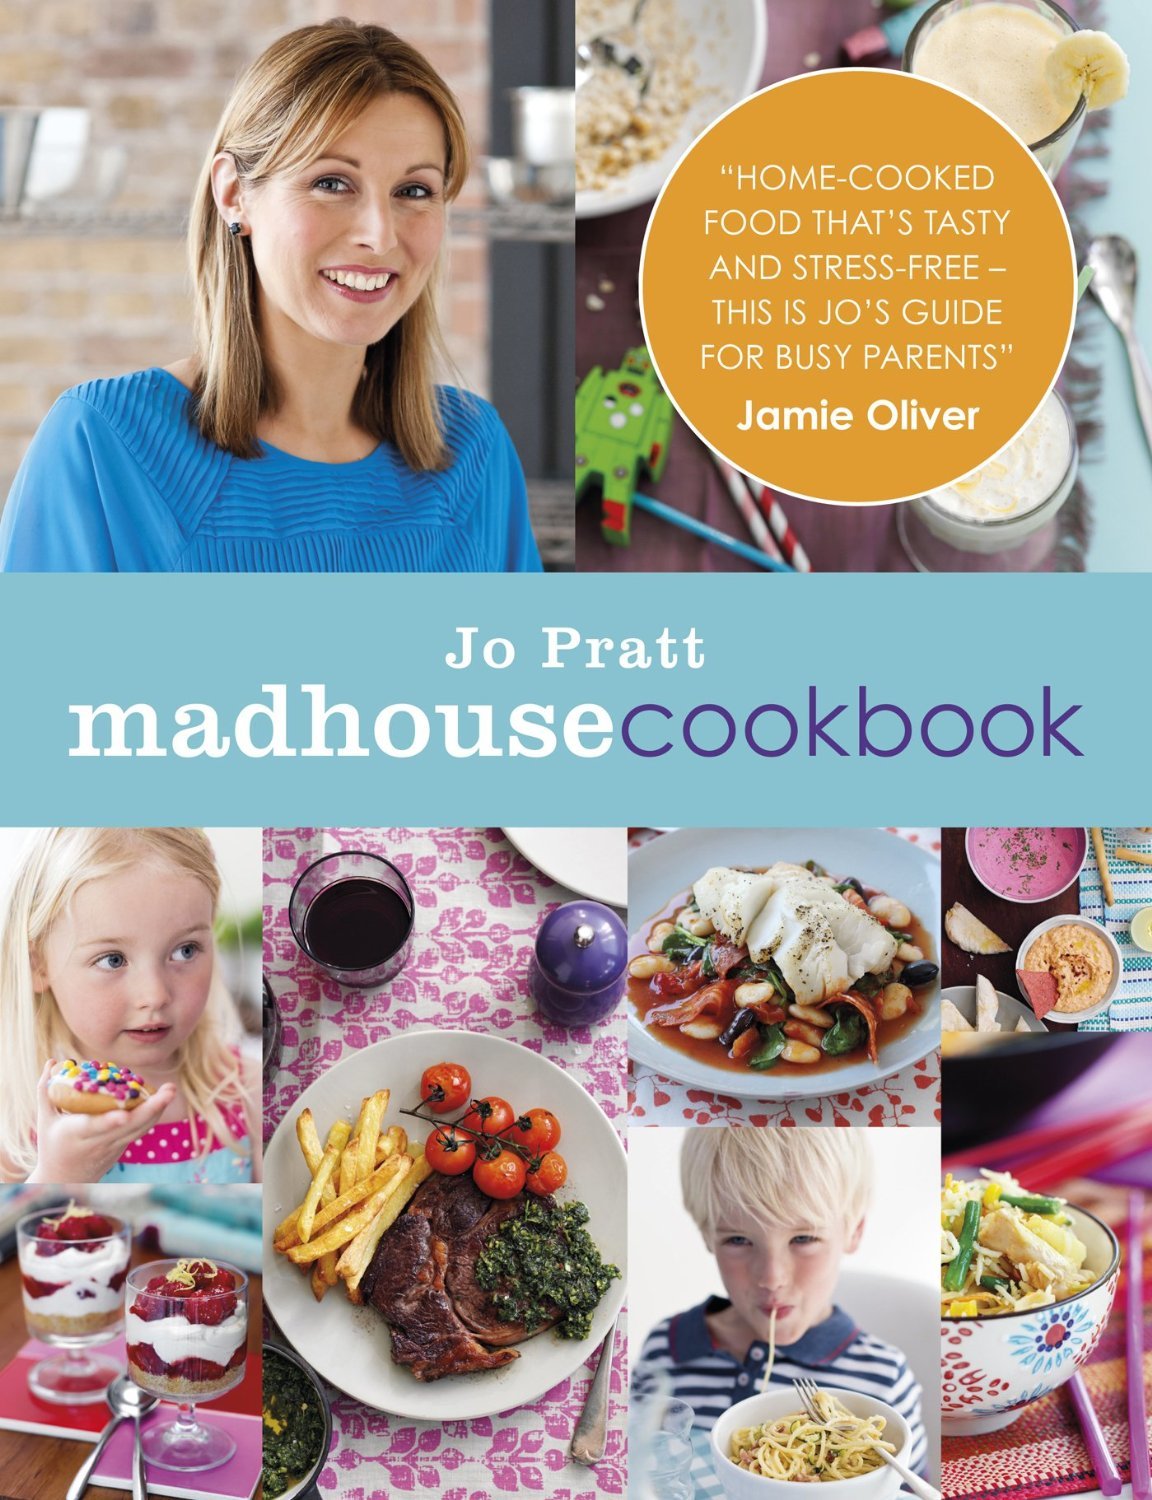 Madhouse Cookbook